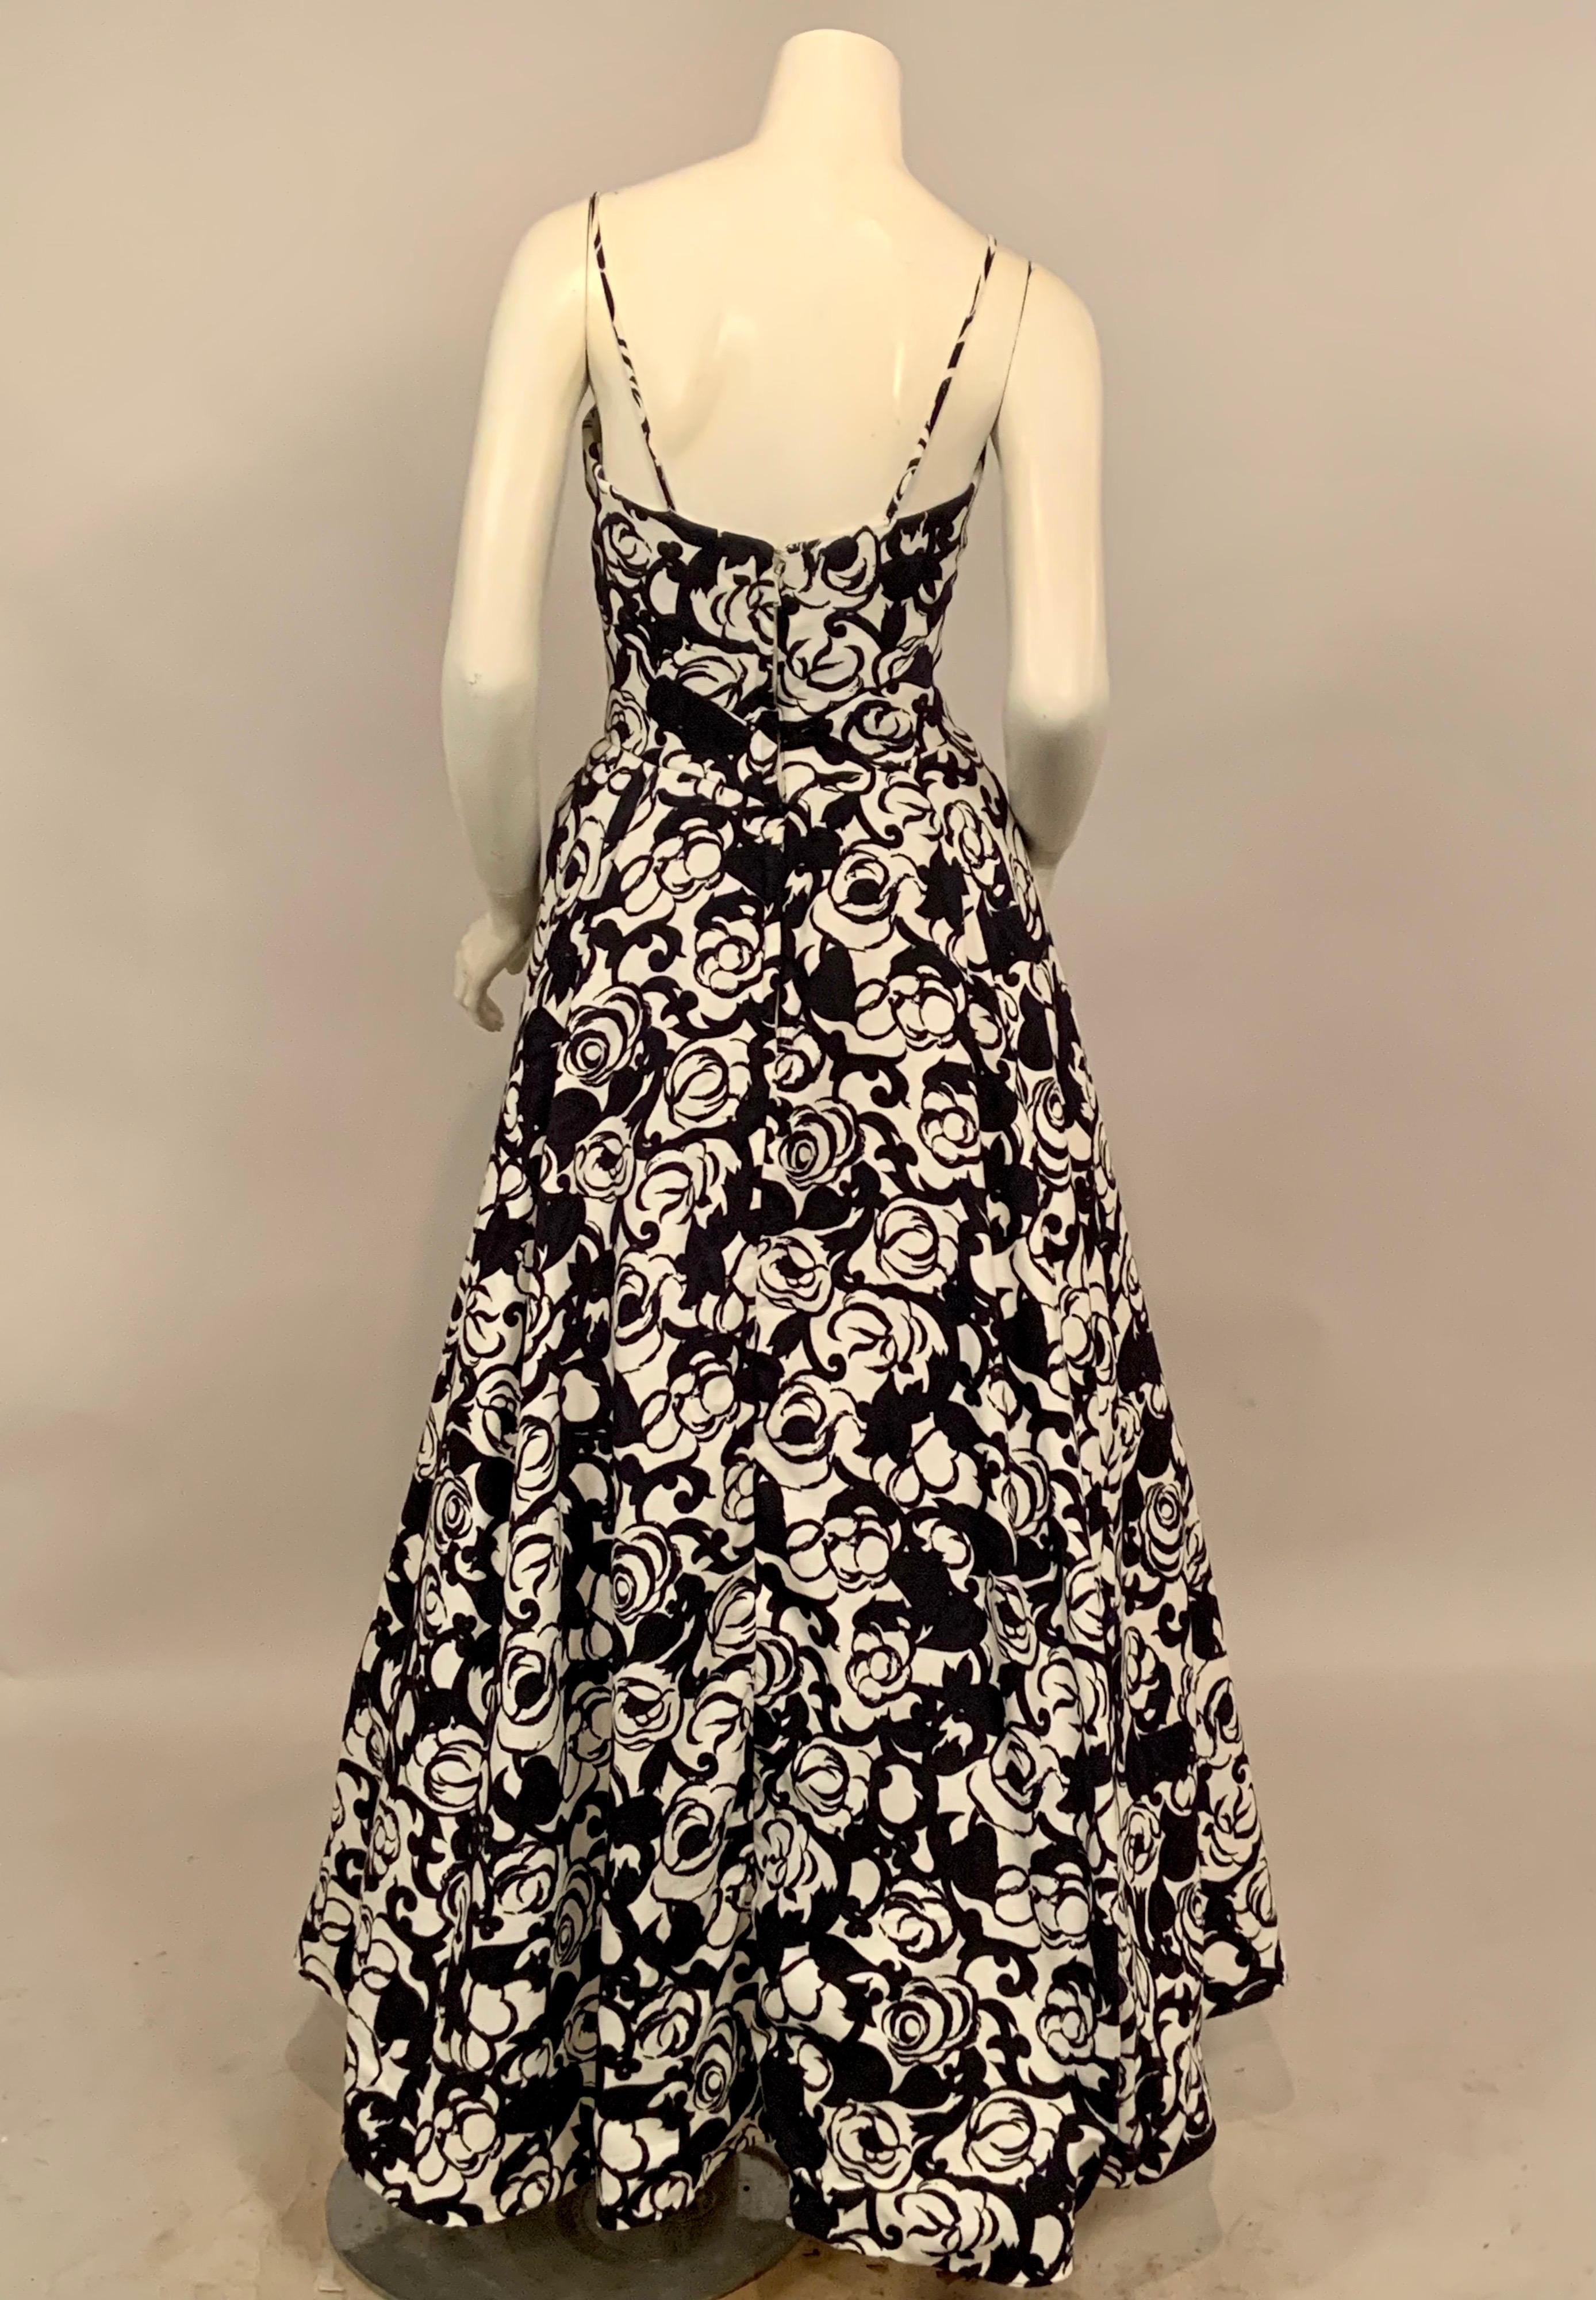 Beige Striking Black and White Floral Print Cotton Pique Evening Gown by Will Steinman